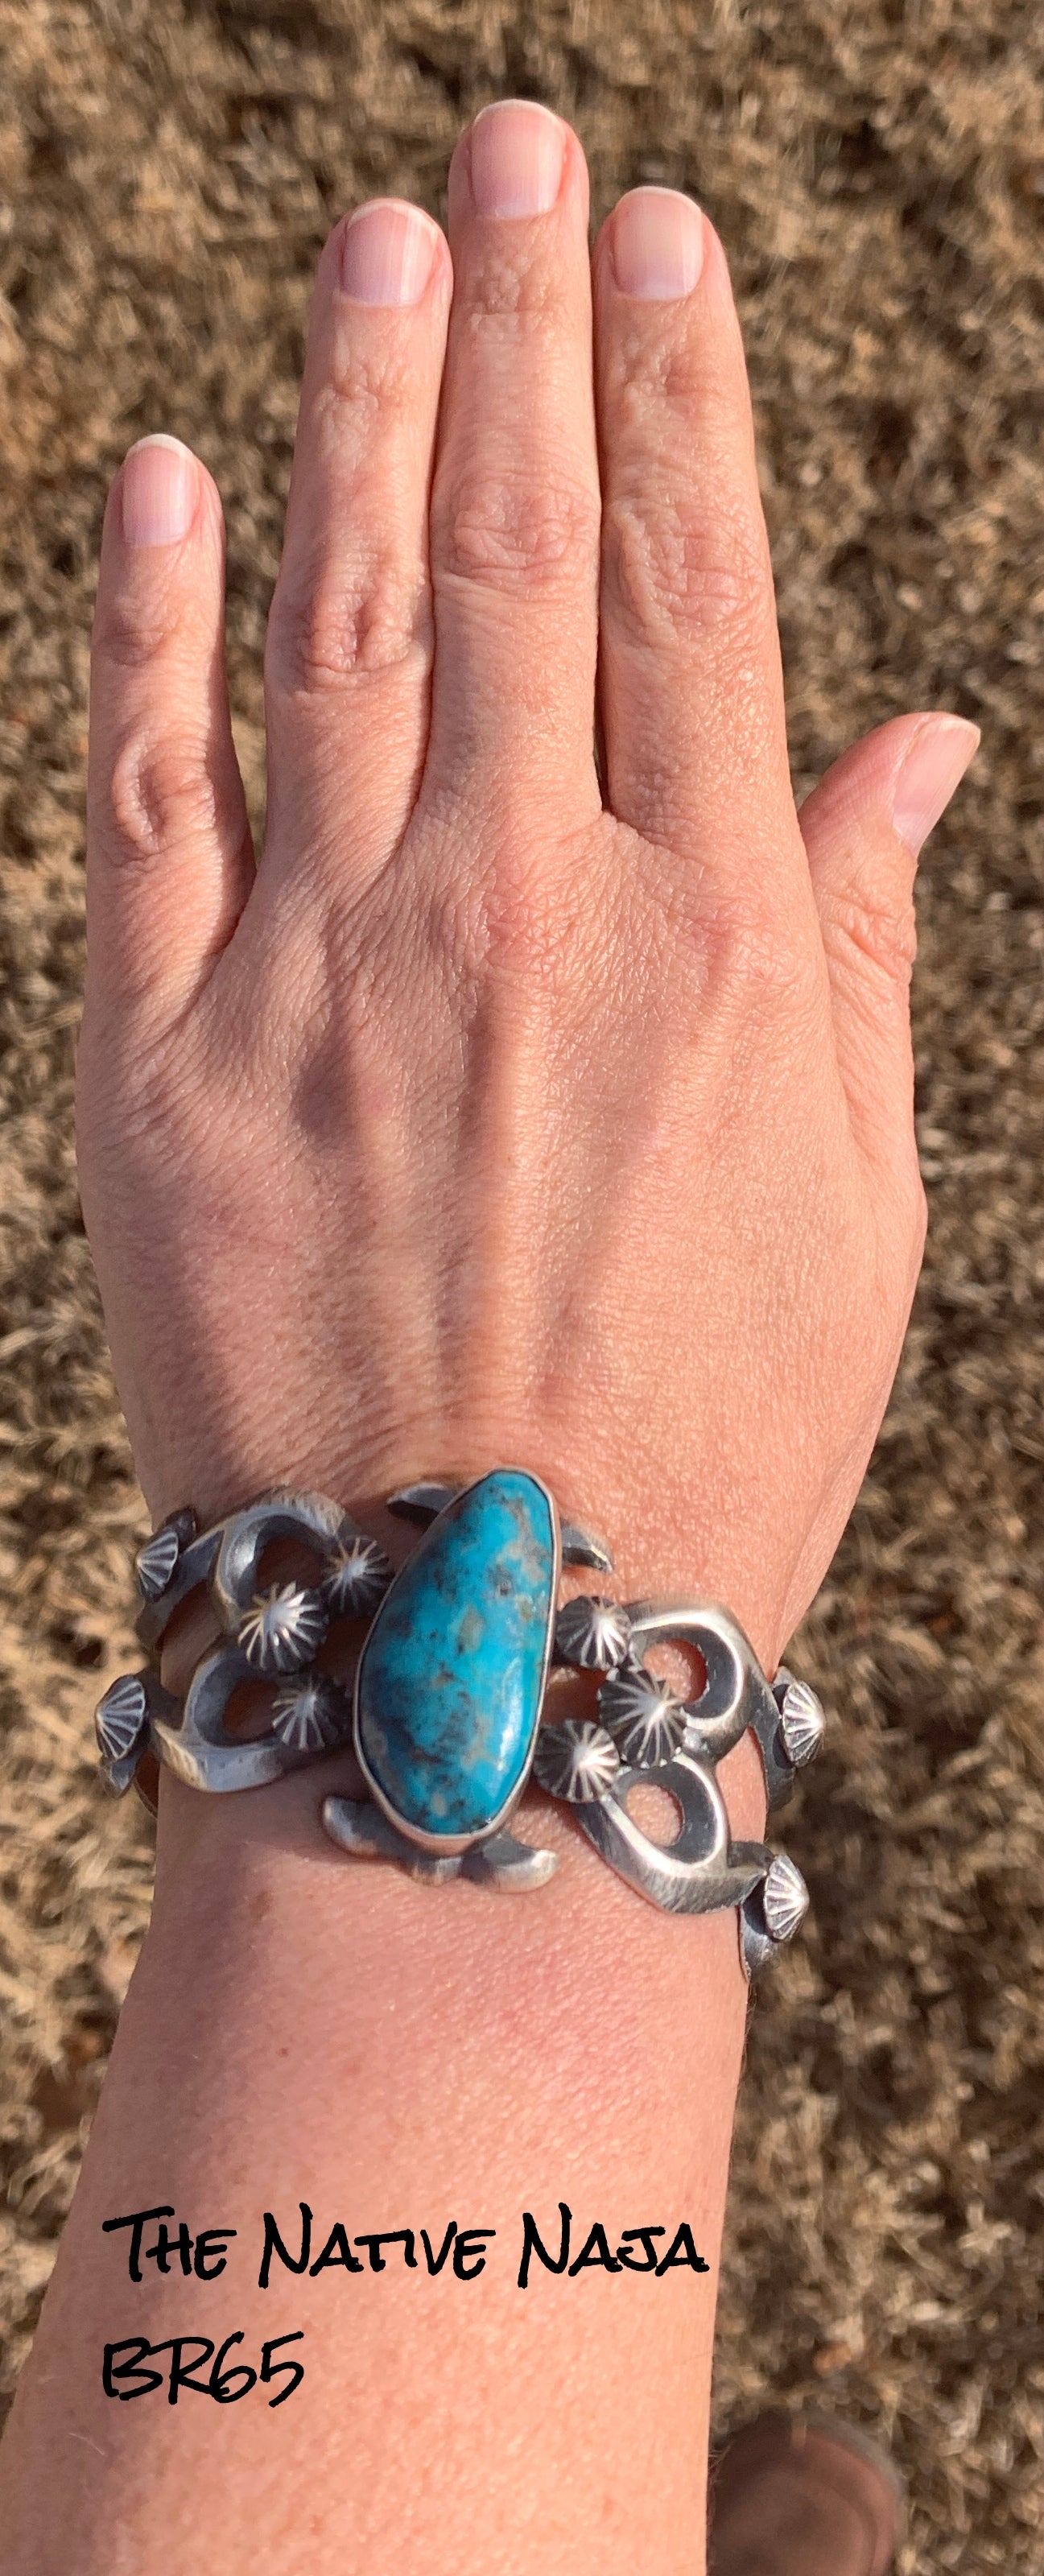 Navajo Chimney Butte Genuine Turquoise & Sterling Silver Sandcast Cuff Bracelet BR65